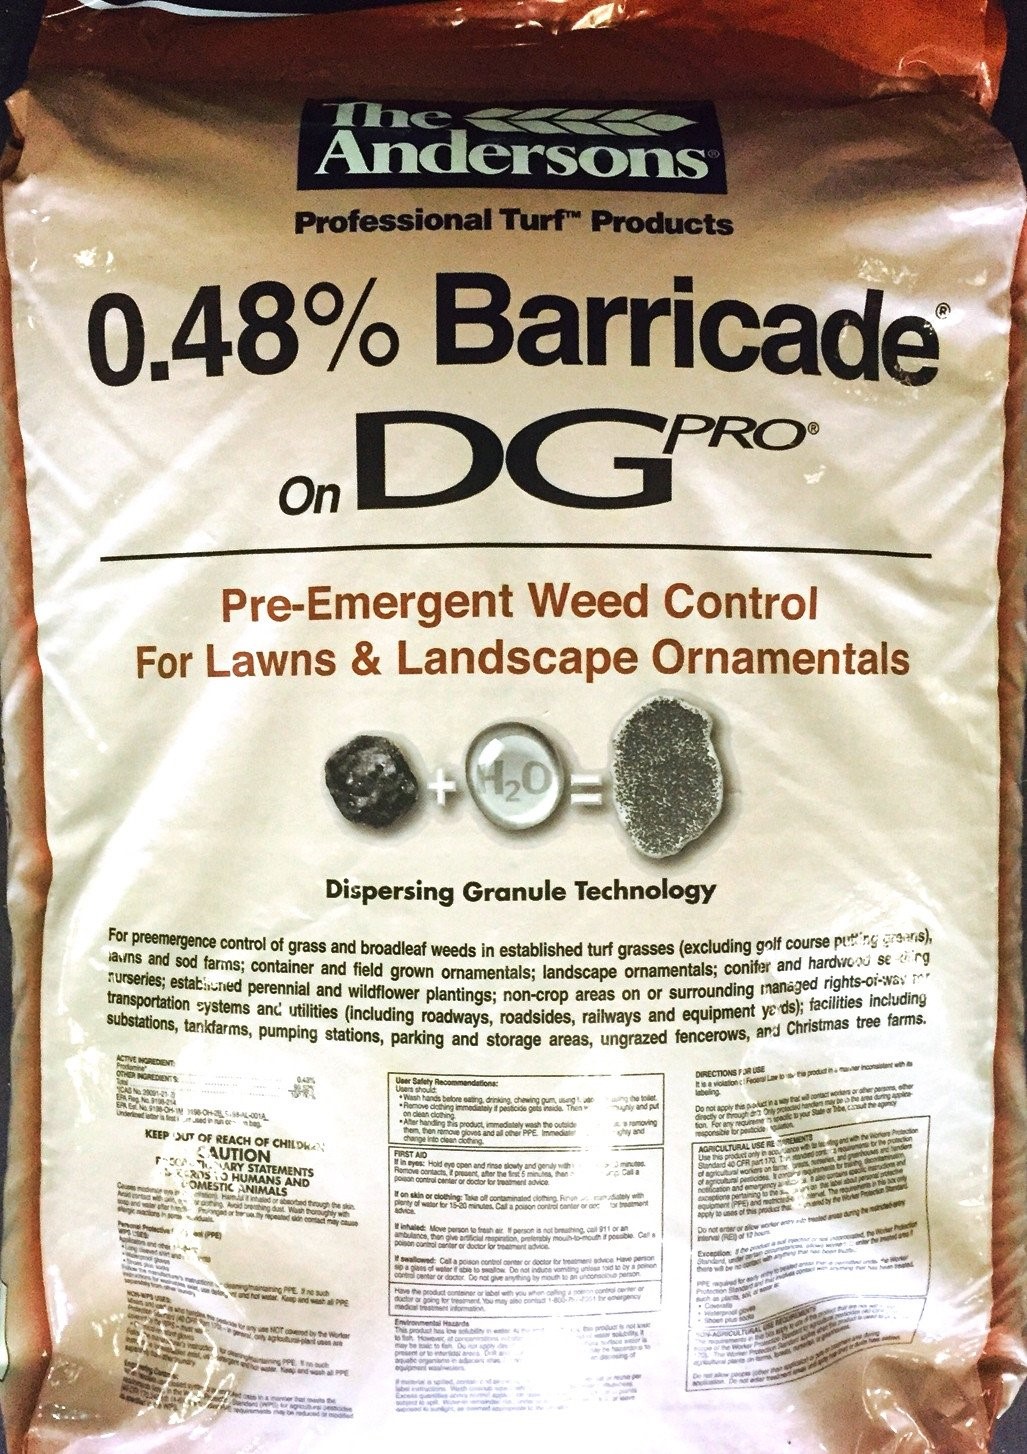 Barricade .48% DG Pro  50 lbs bag - Herbicides